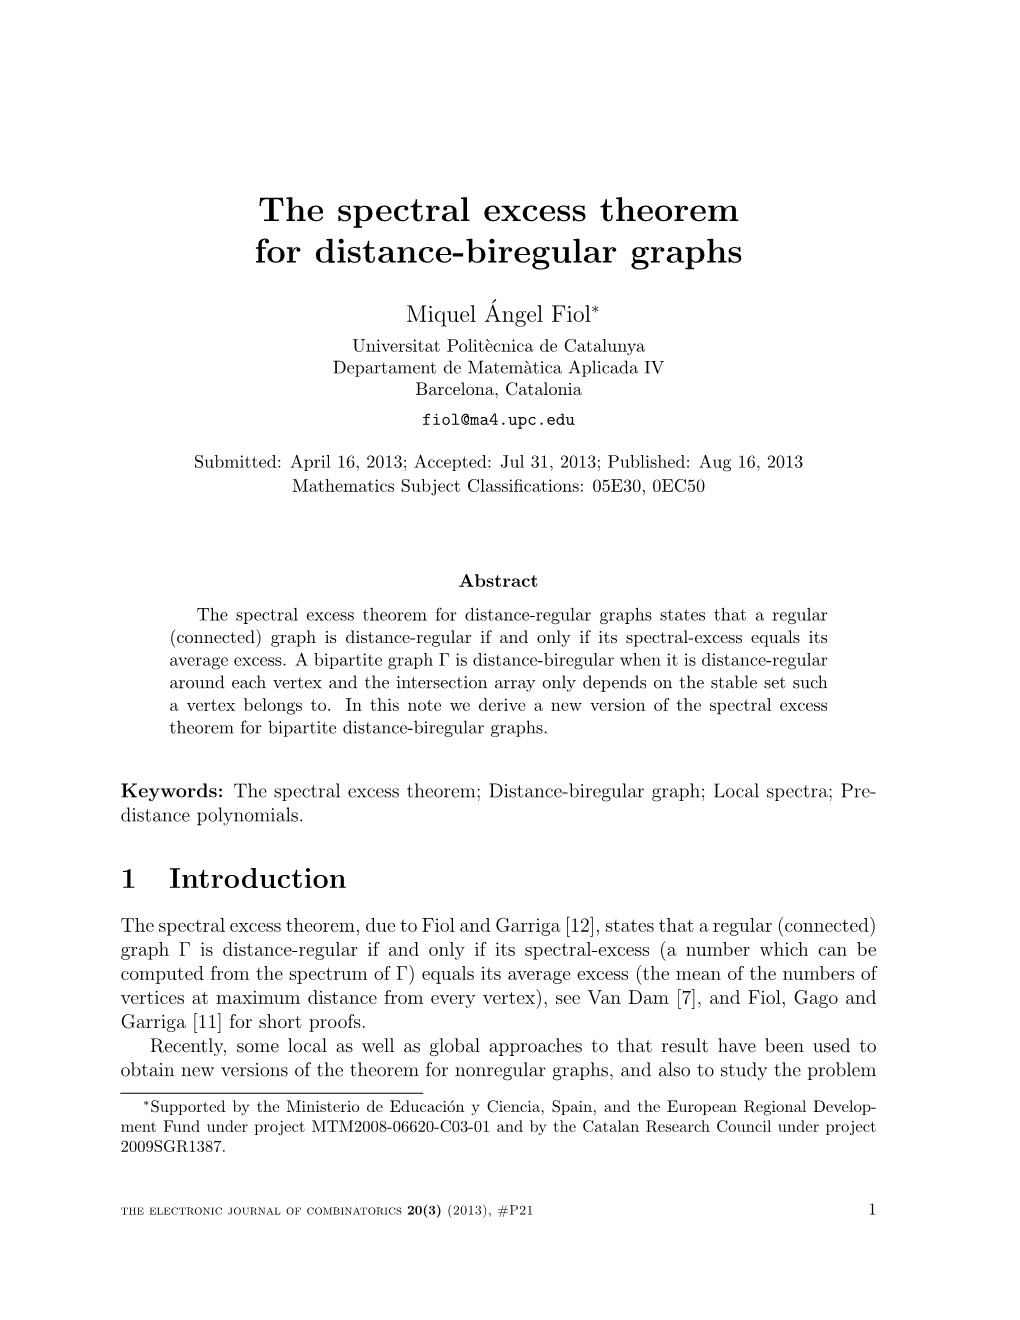 The Spectral Excess Theorem for Distance-Biregular Graphs